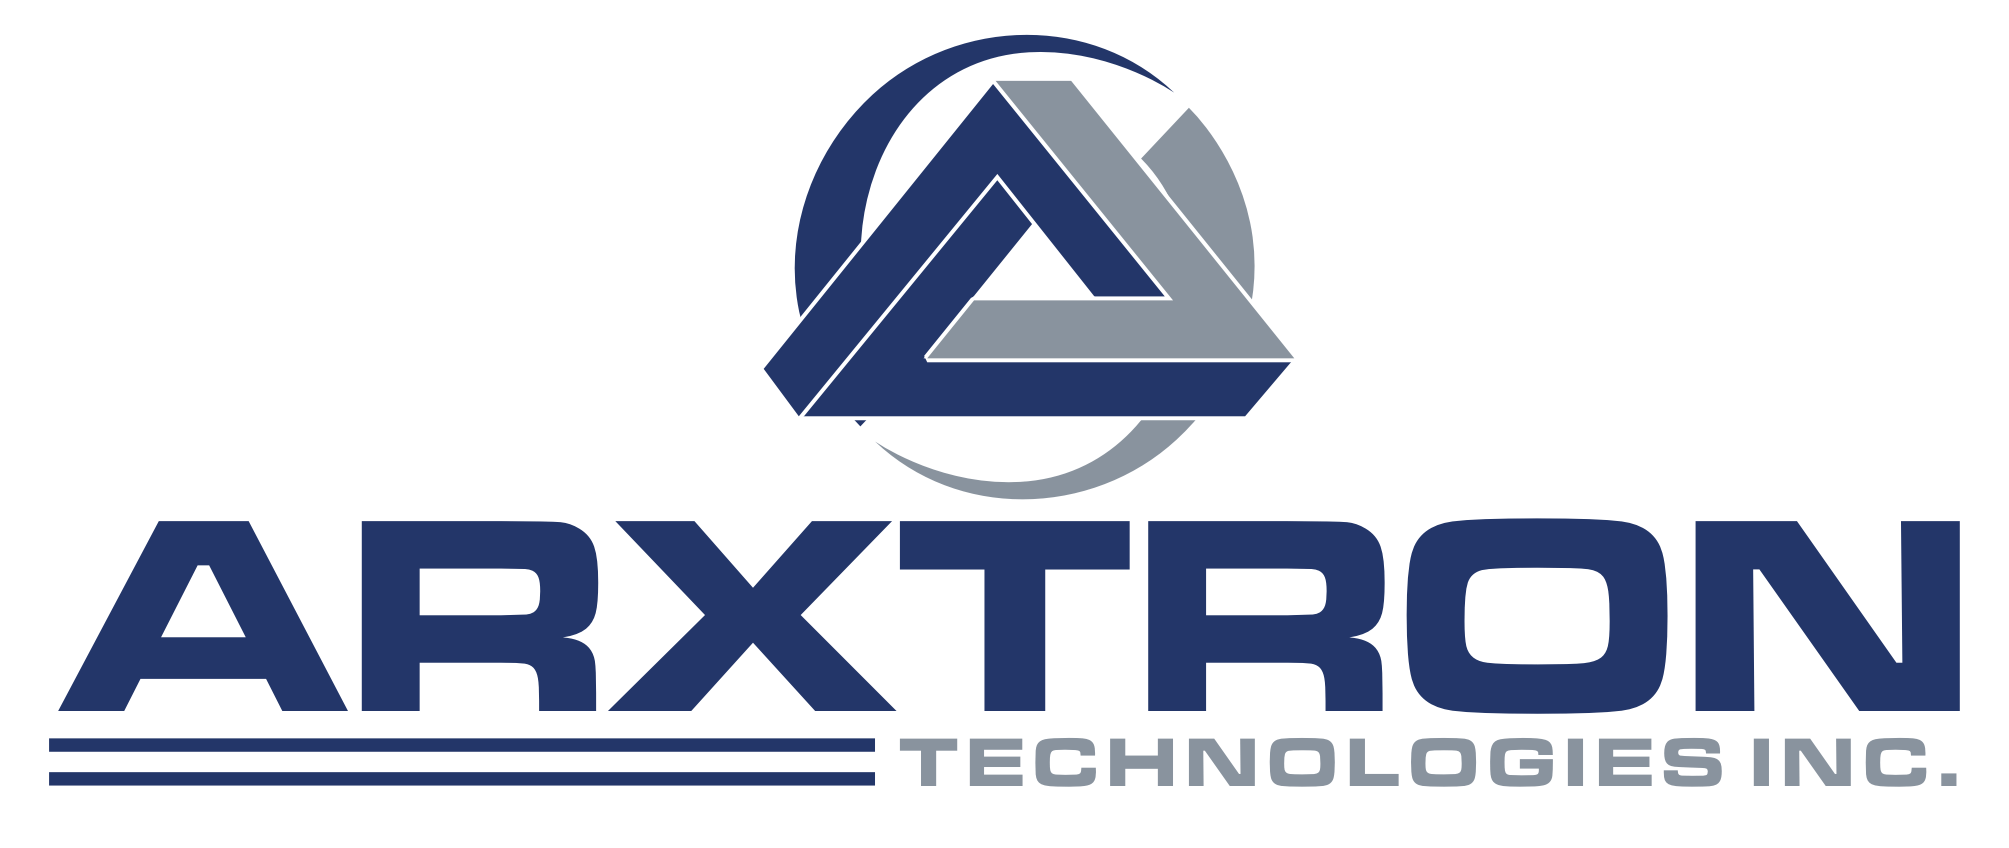 Arxtron Technologies Inc.